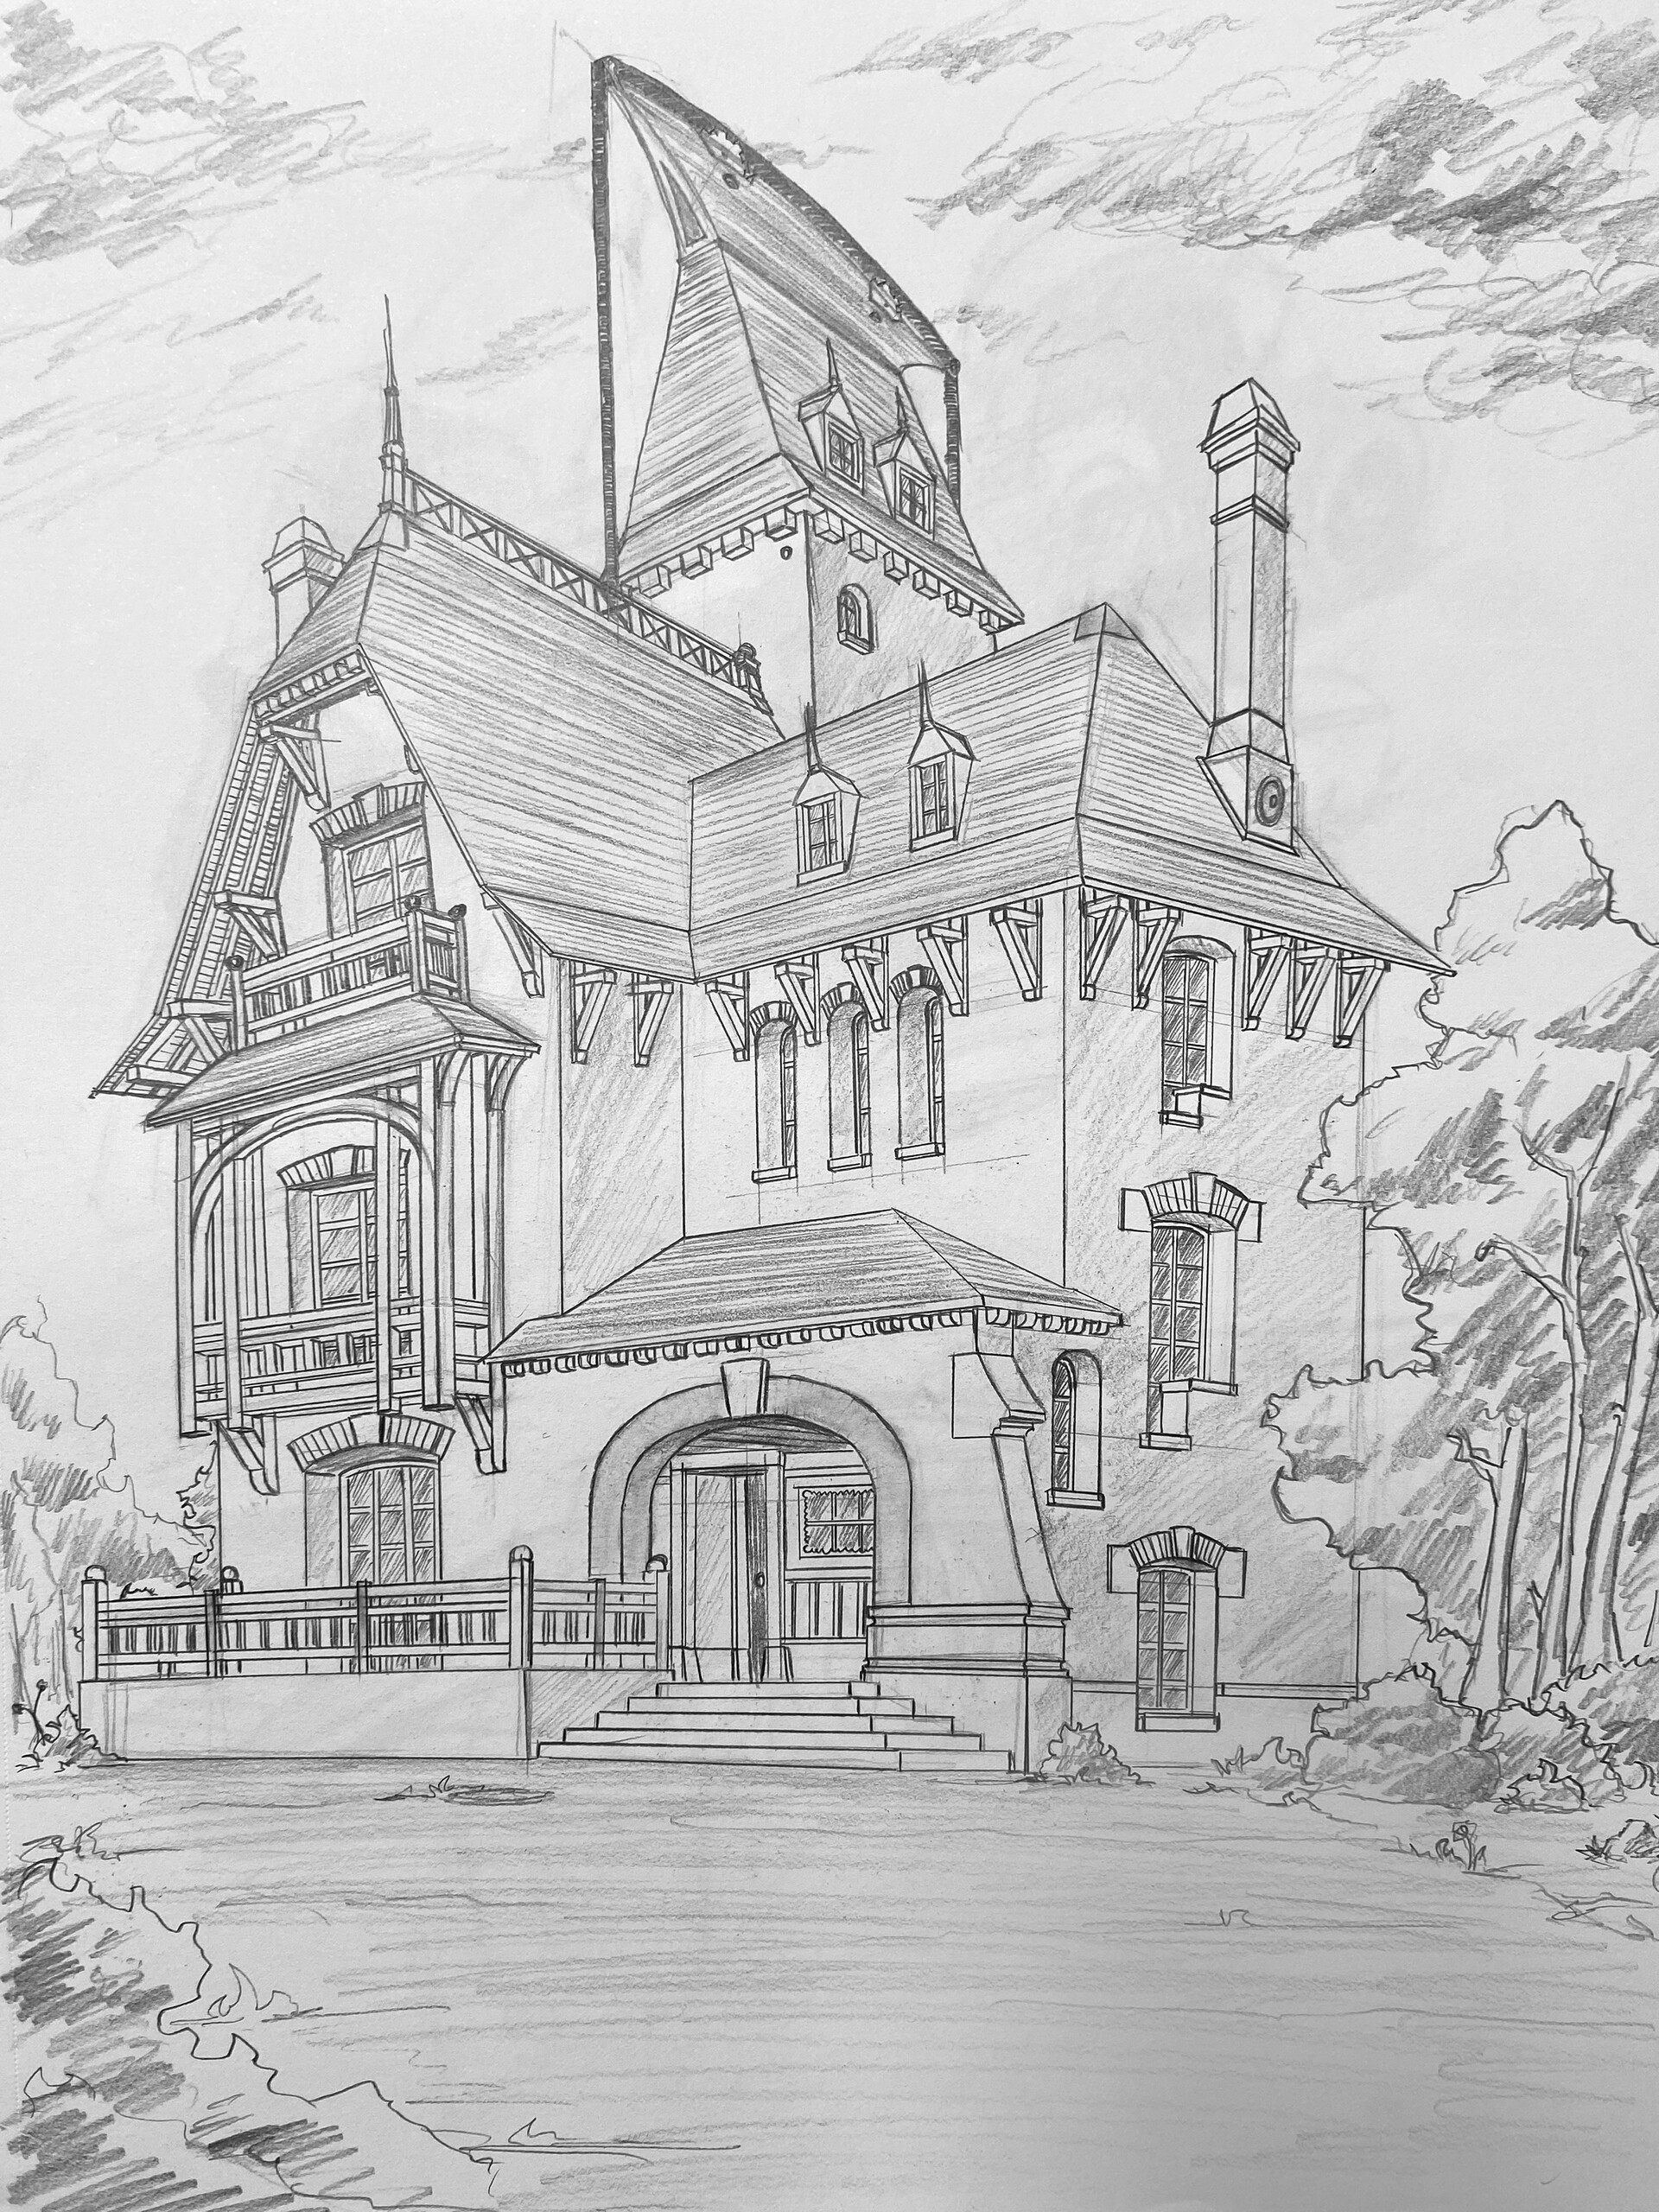 ArtStation - Countryside Hachet House - Sketch